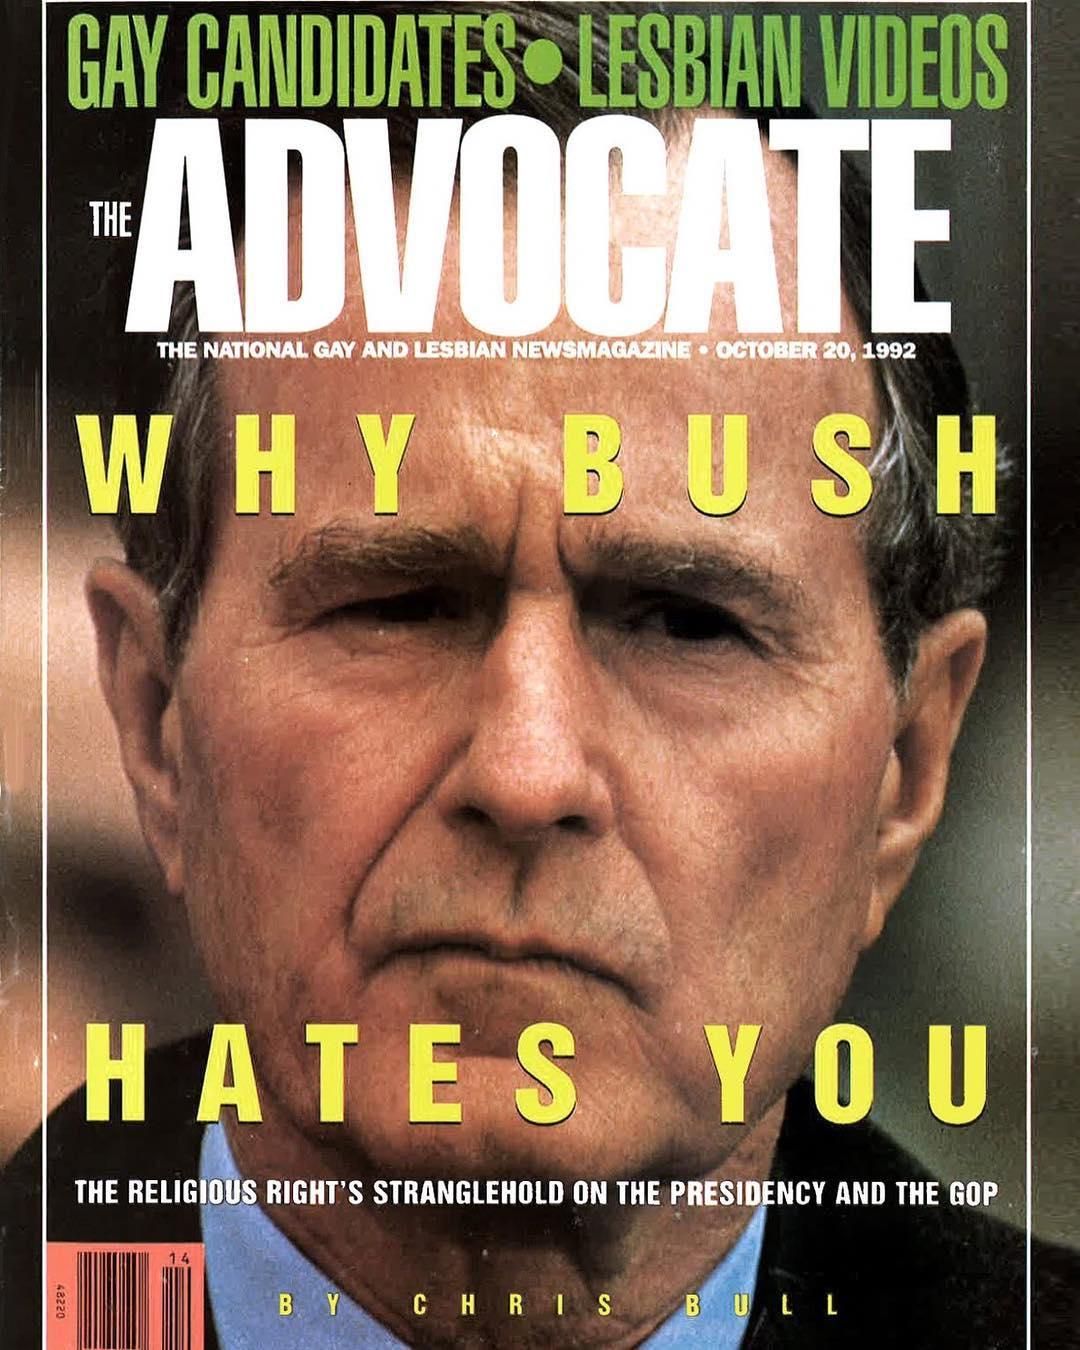 Bush Hates You